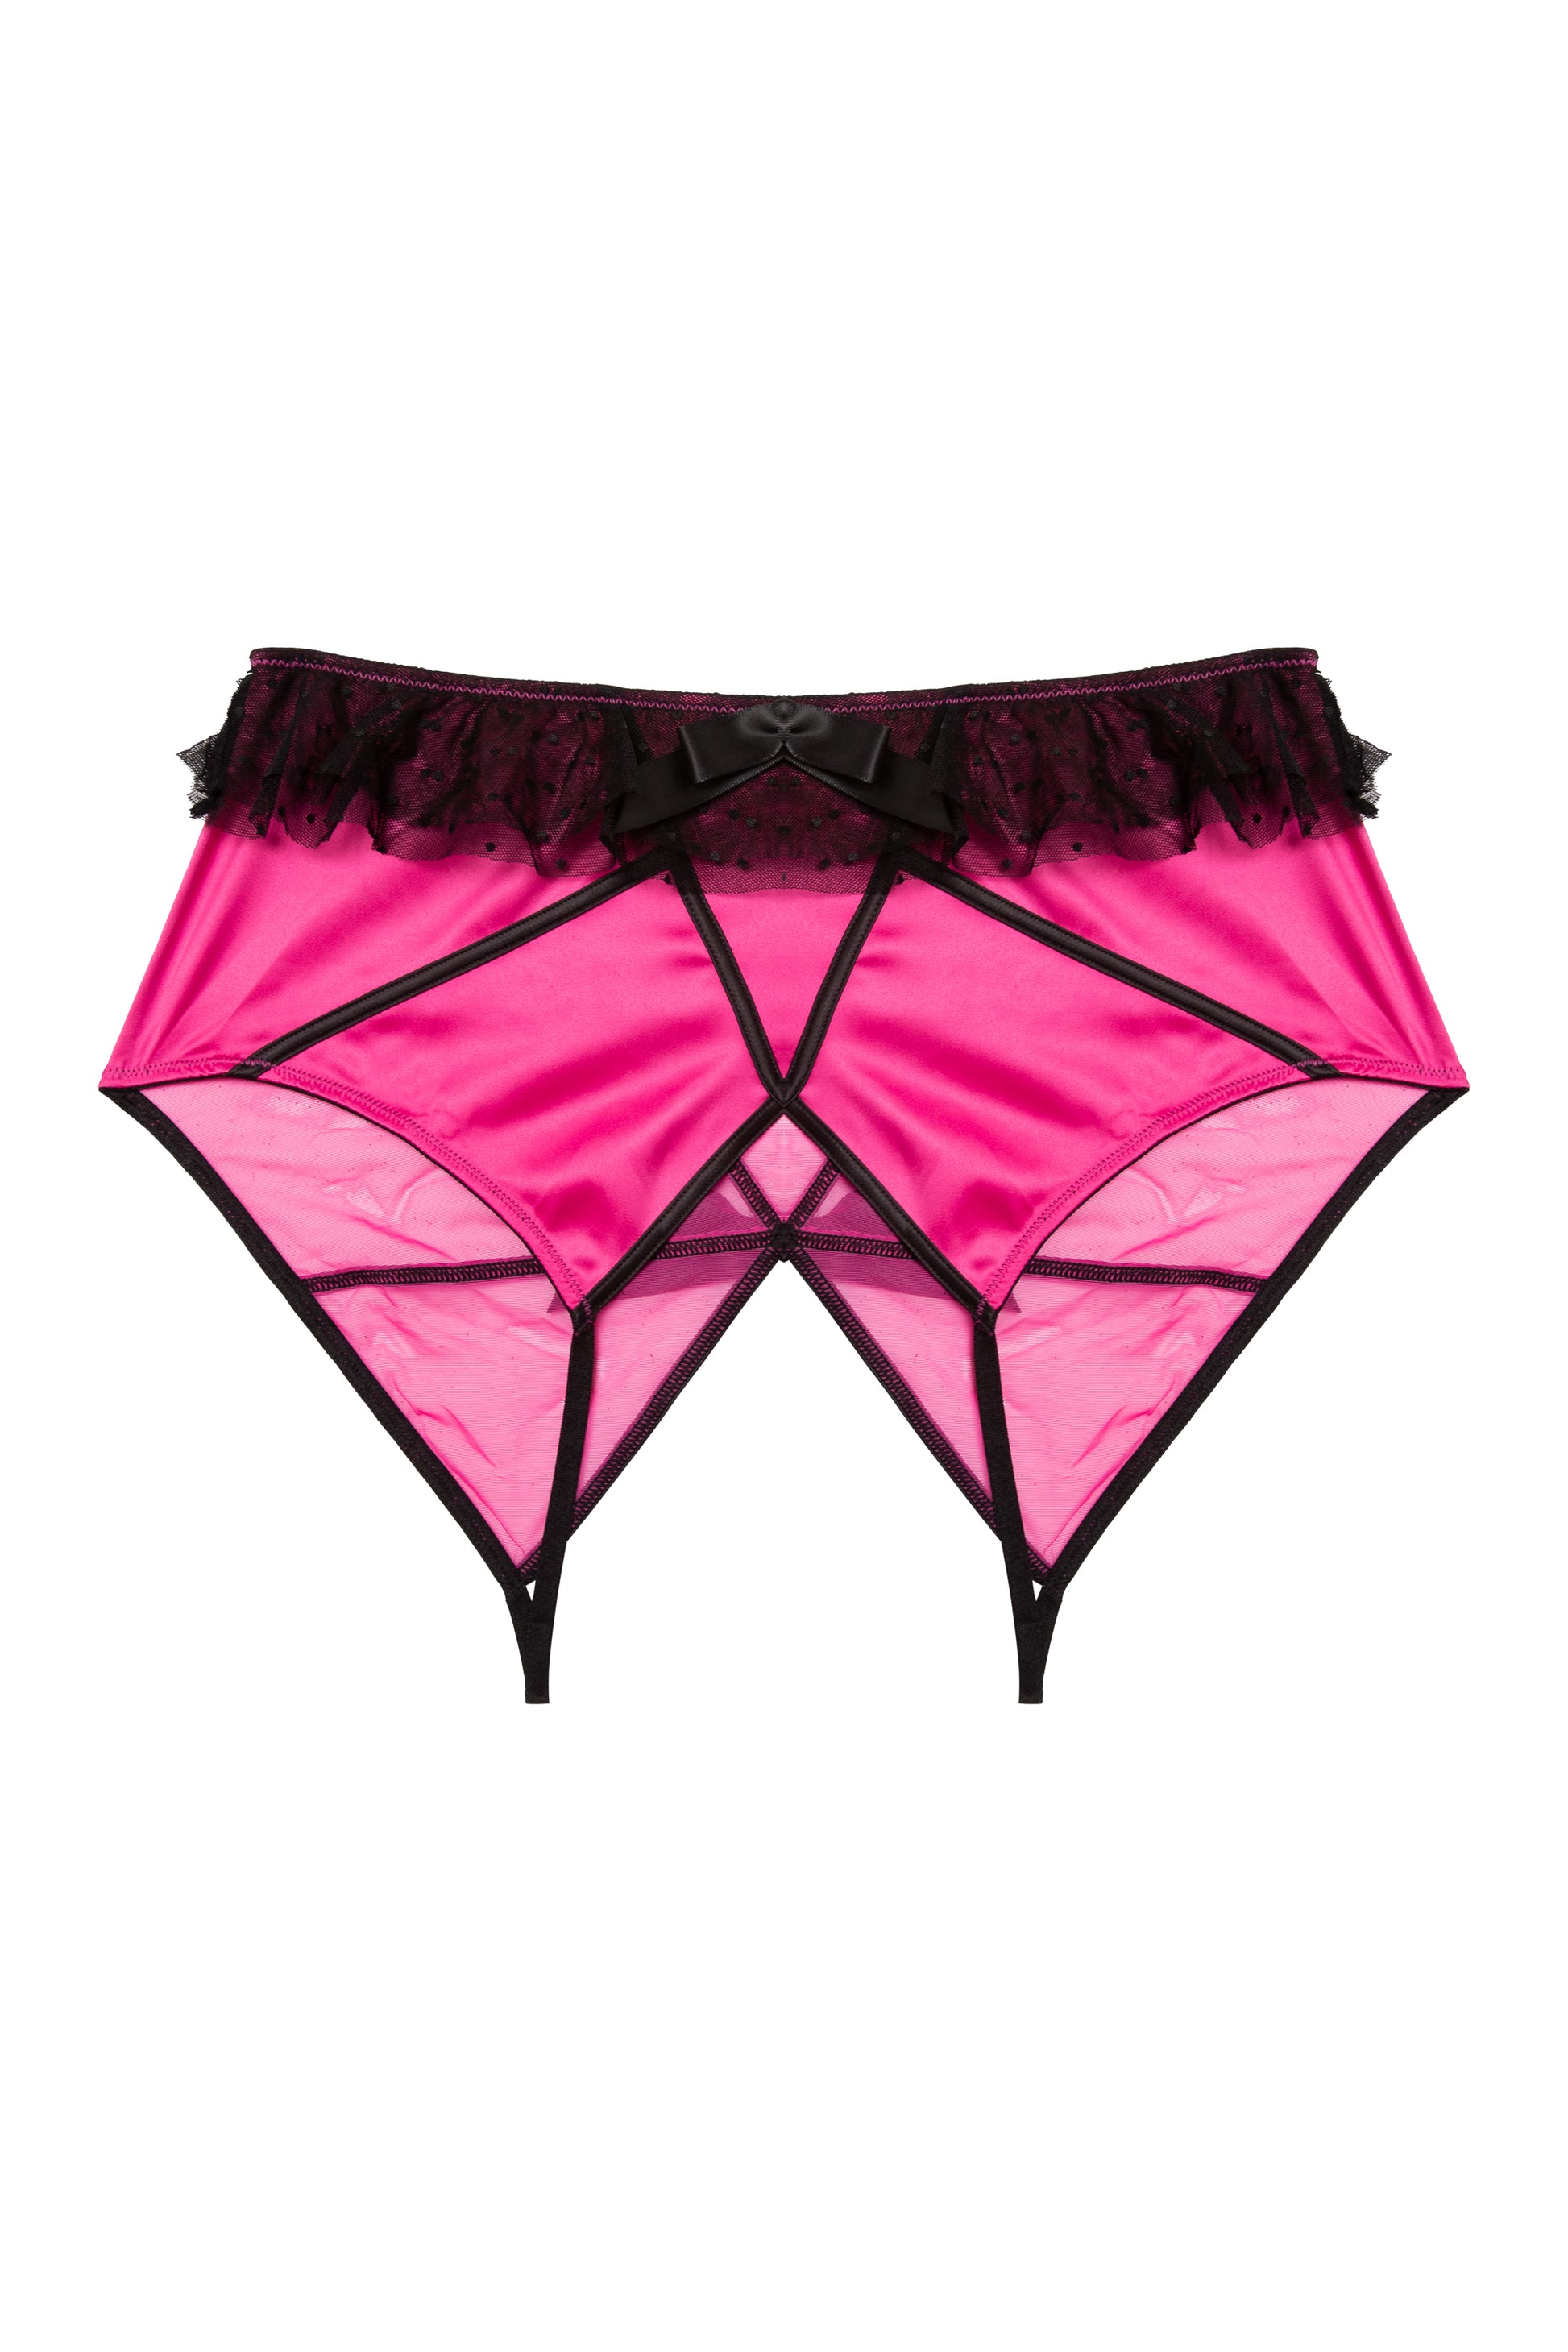 Plato's Closet Cranberry, Pa - ‪New Victoria's Secret underwear, with tags!  Sizes are L/XL!🎀💁🏼🛍❤🌹😍‬